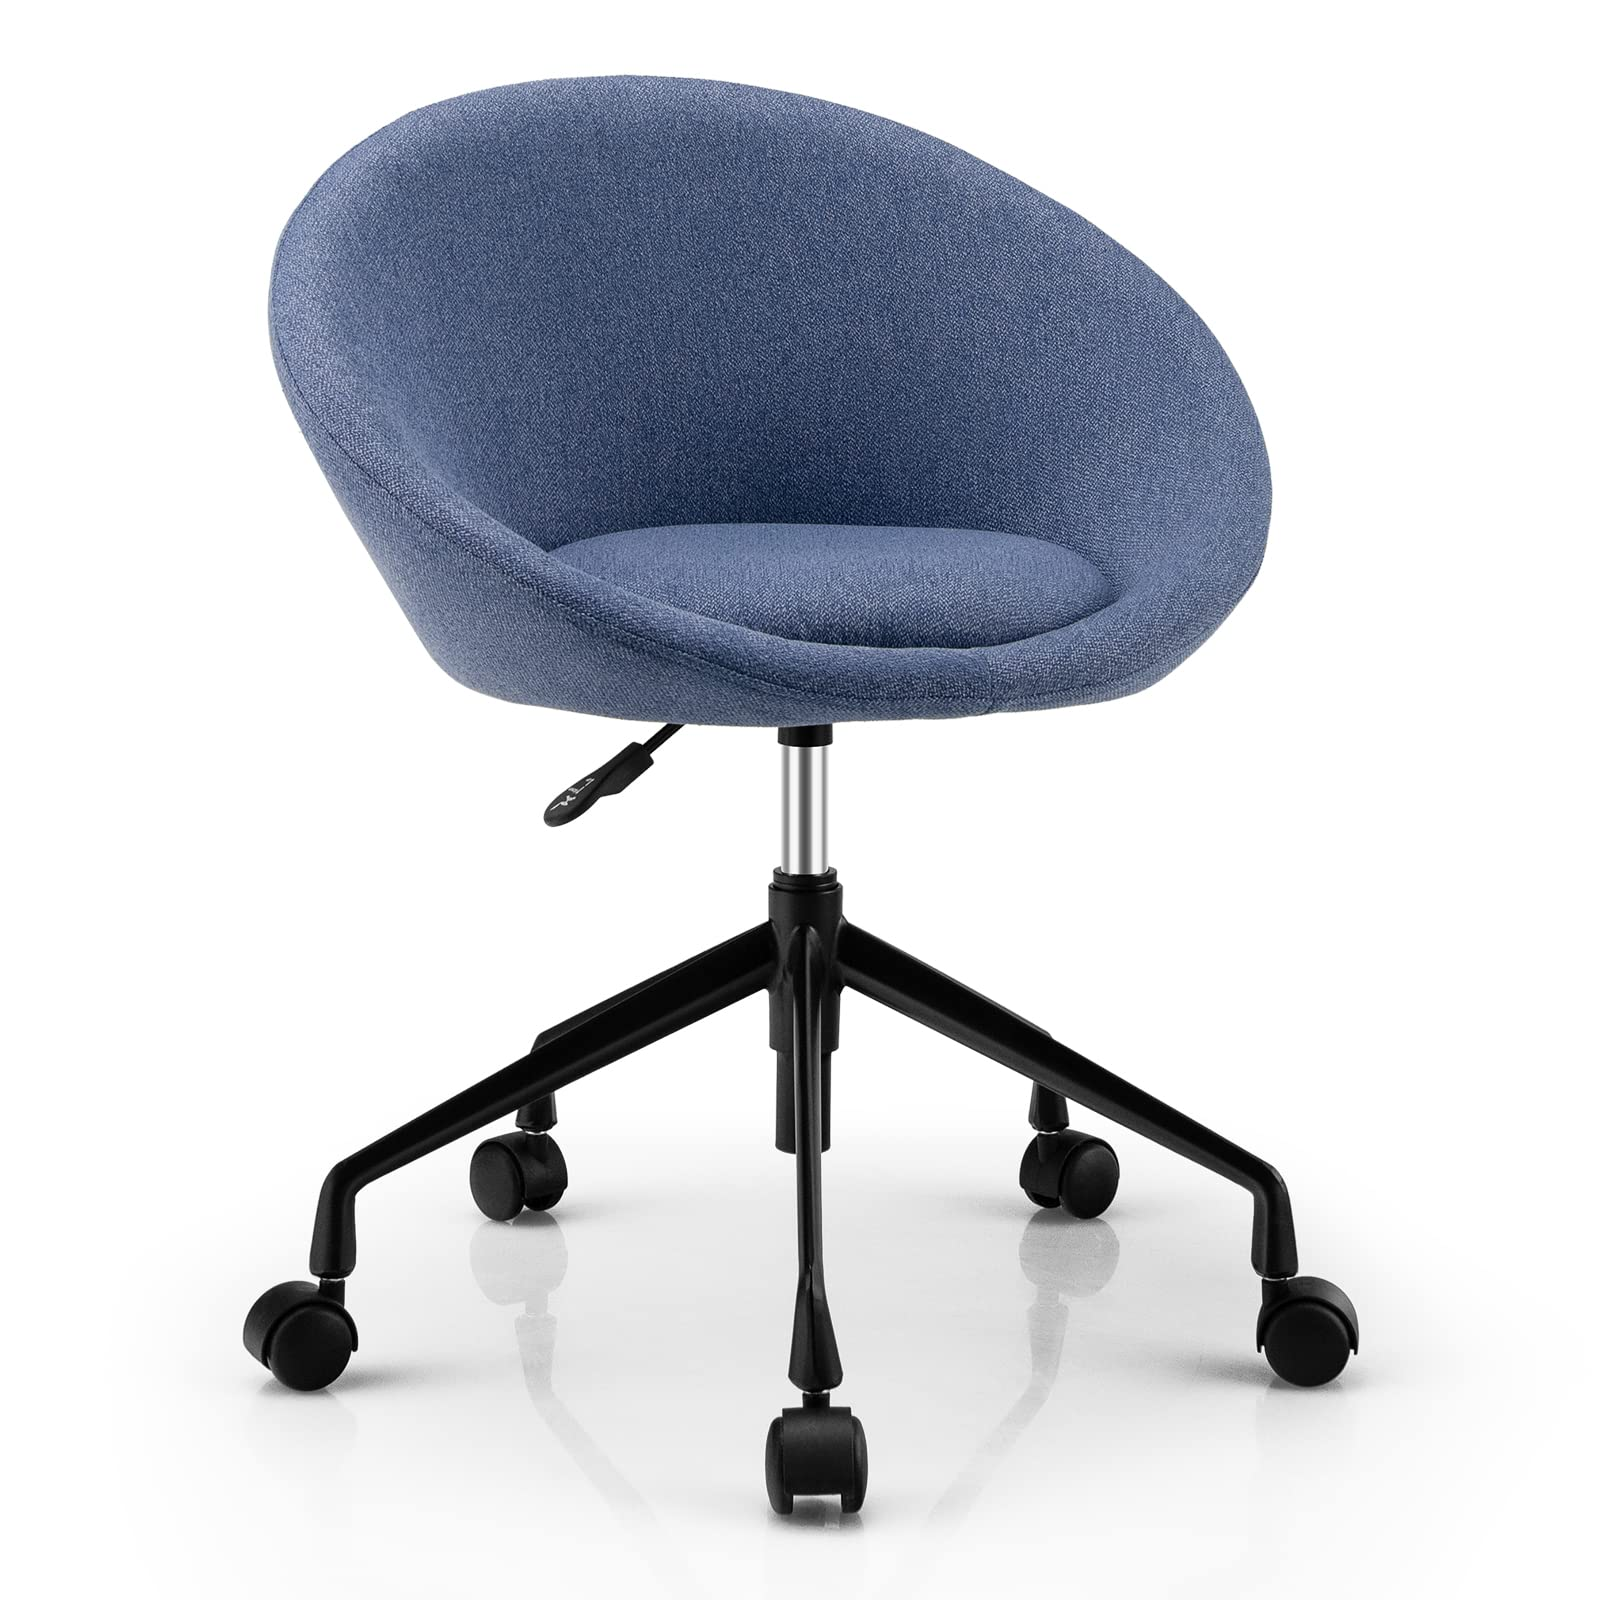 Giantex Home Office Chair, Swivel Desk Chair